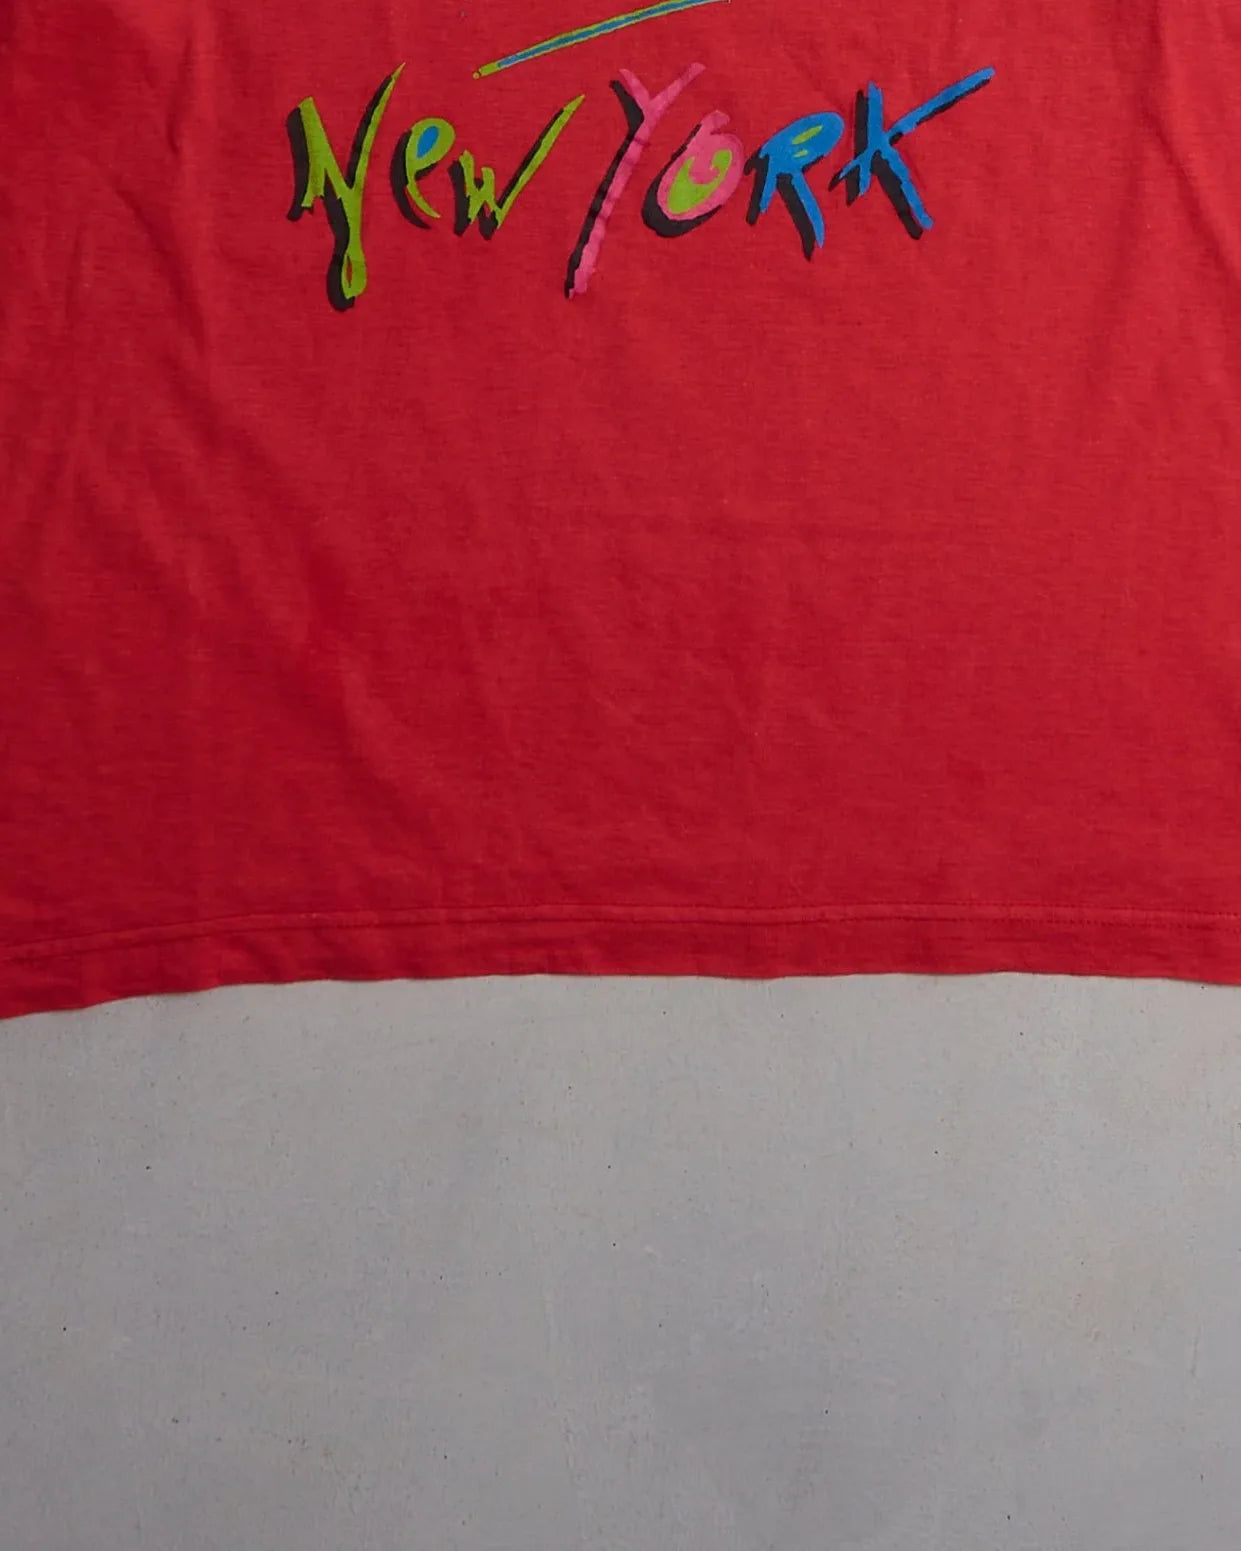 Vintage New York T-Shirt Bottom